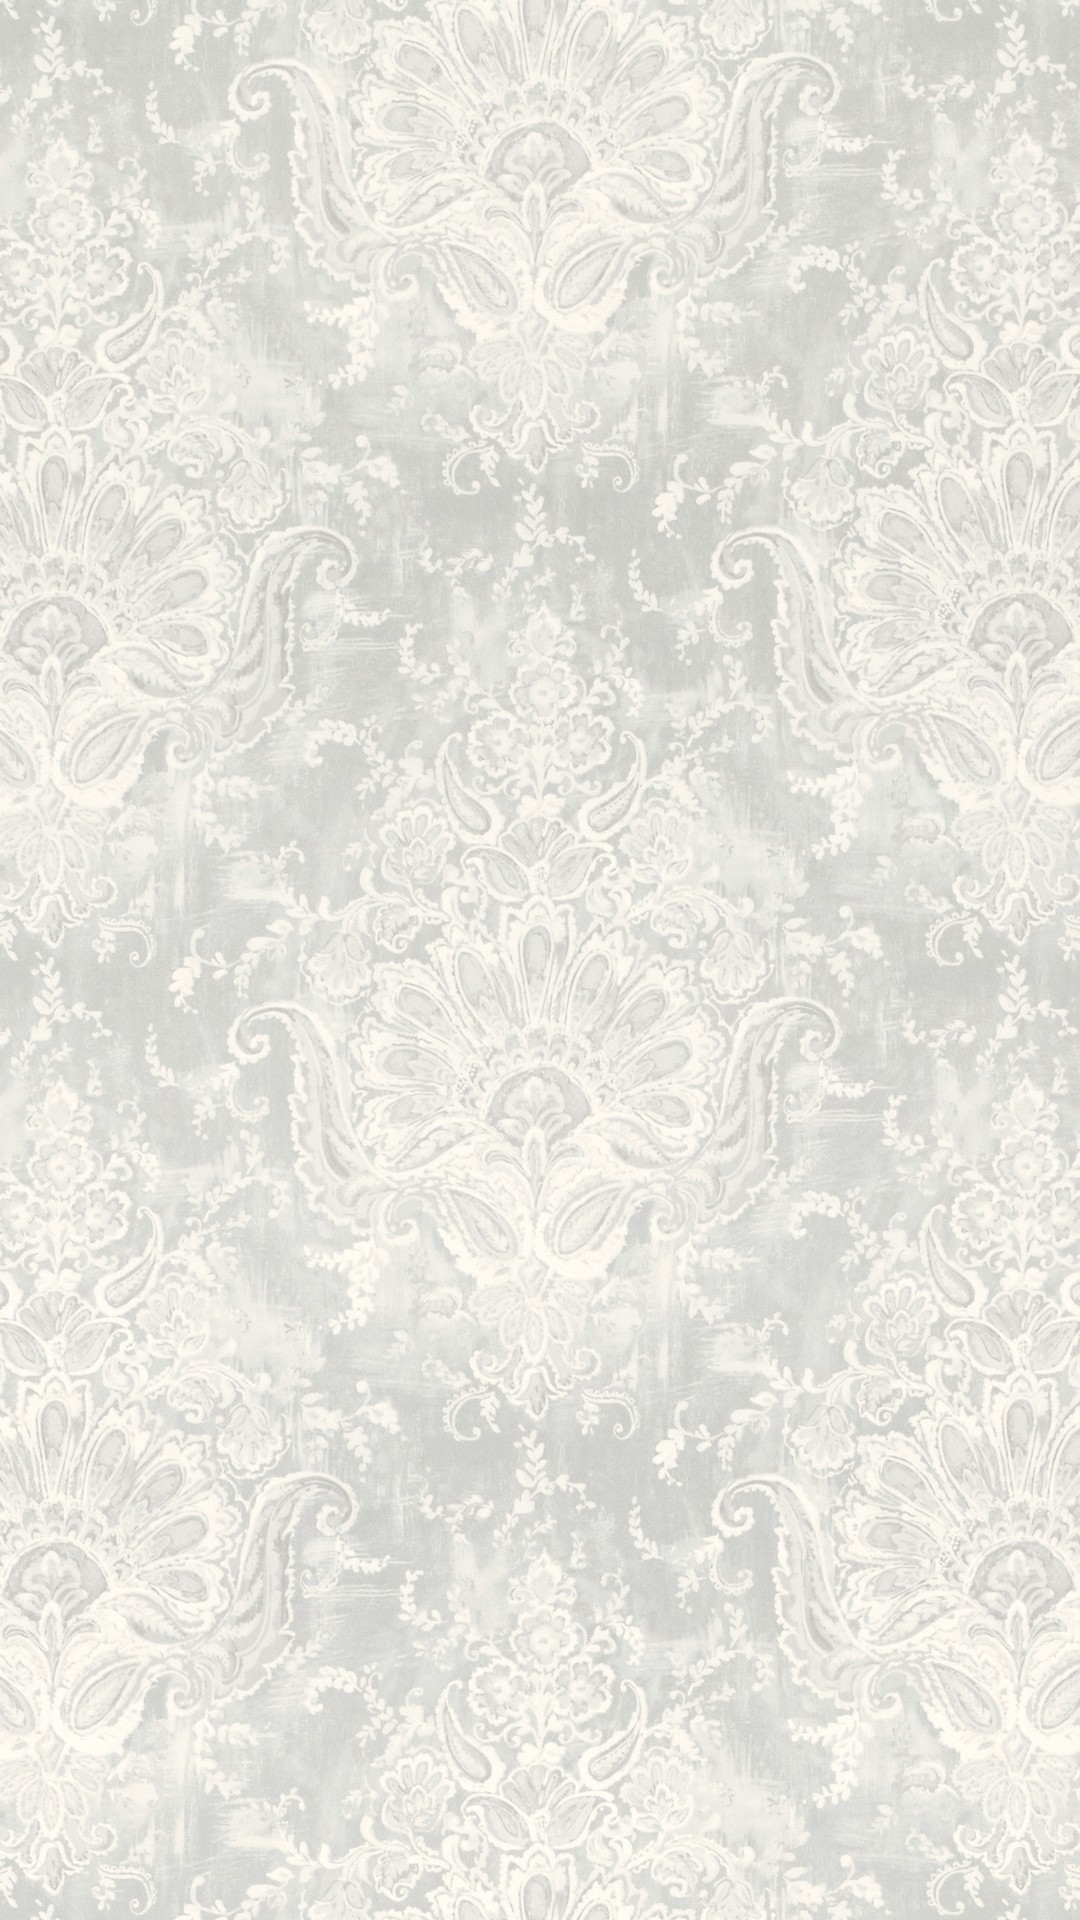 iPhone 8 Wallpaper Silver Grey resolution 1080x1920